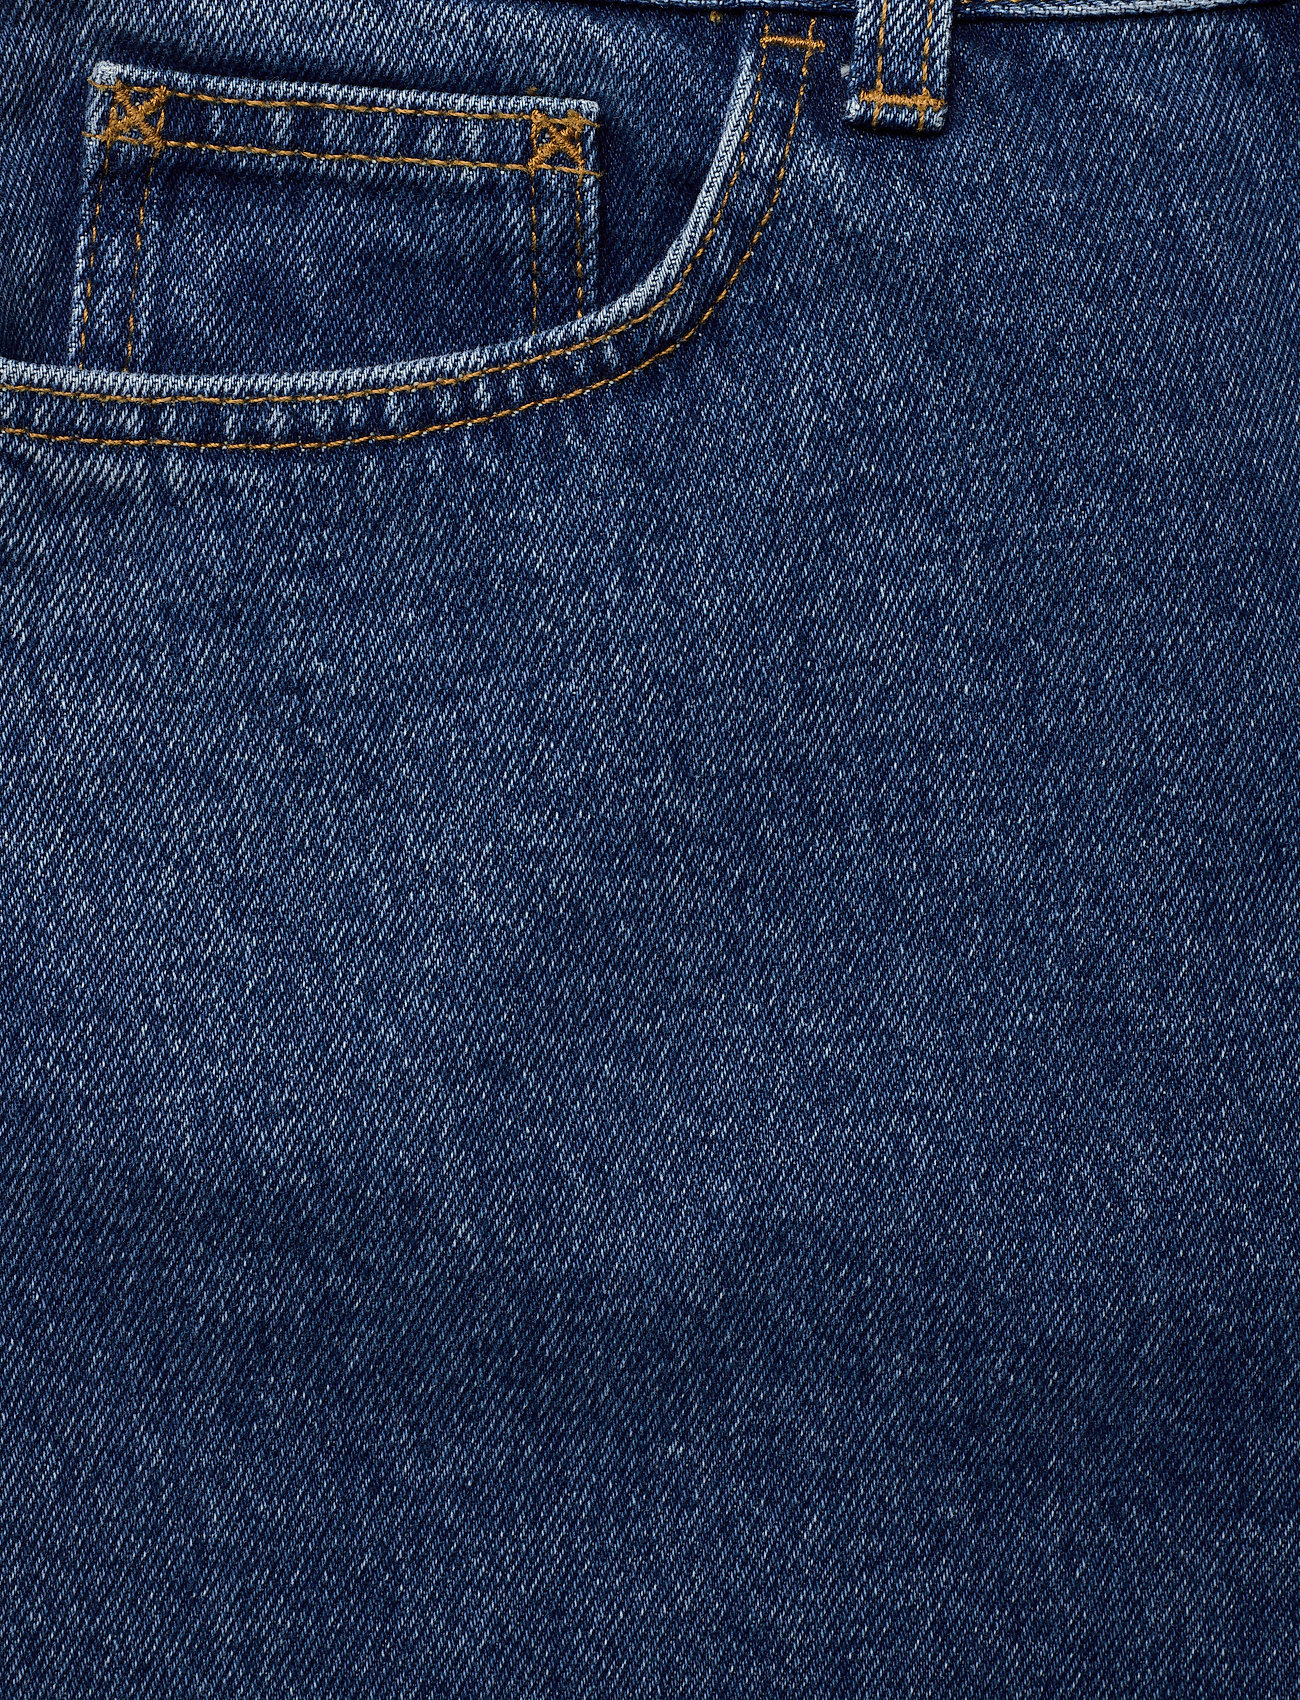 RODEBJER - RODEBJER HALL - flared jeans - vintage blue - 2